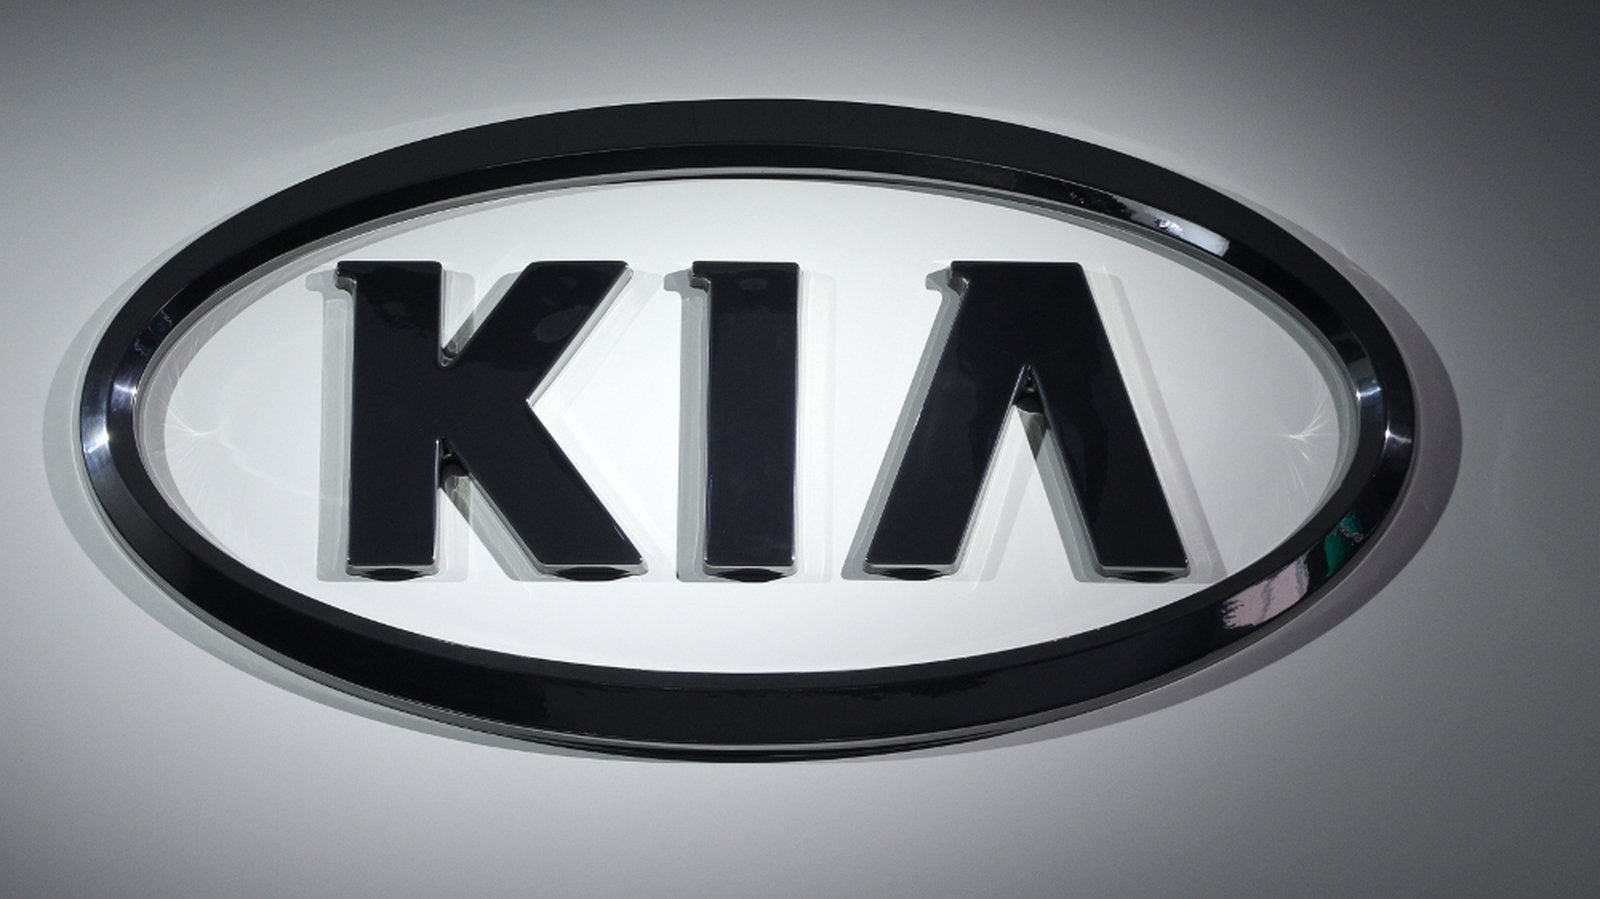 Kia urged to reconsider 'Provo' as new car name